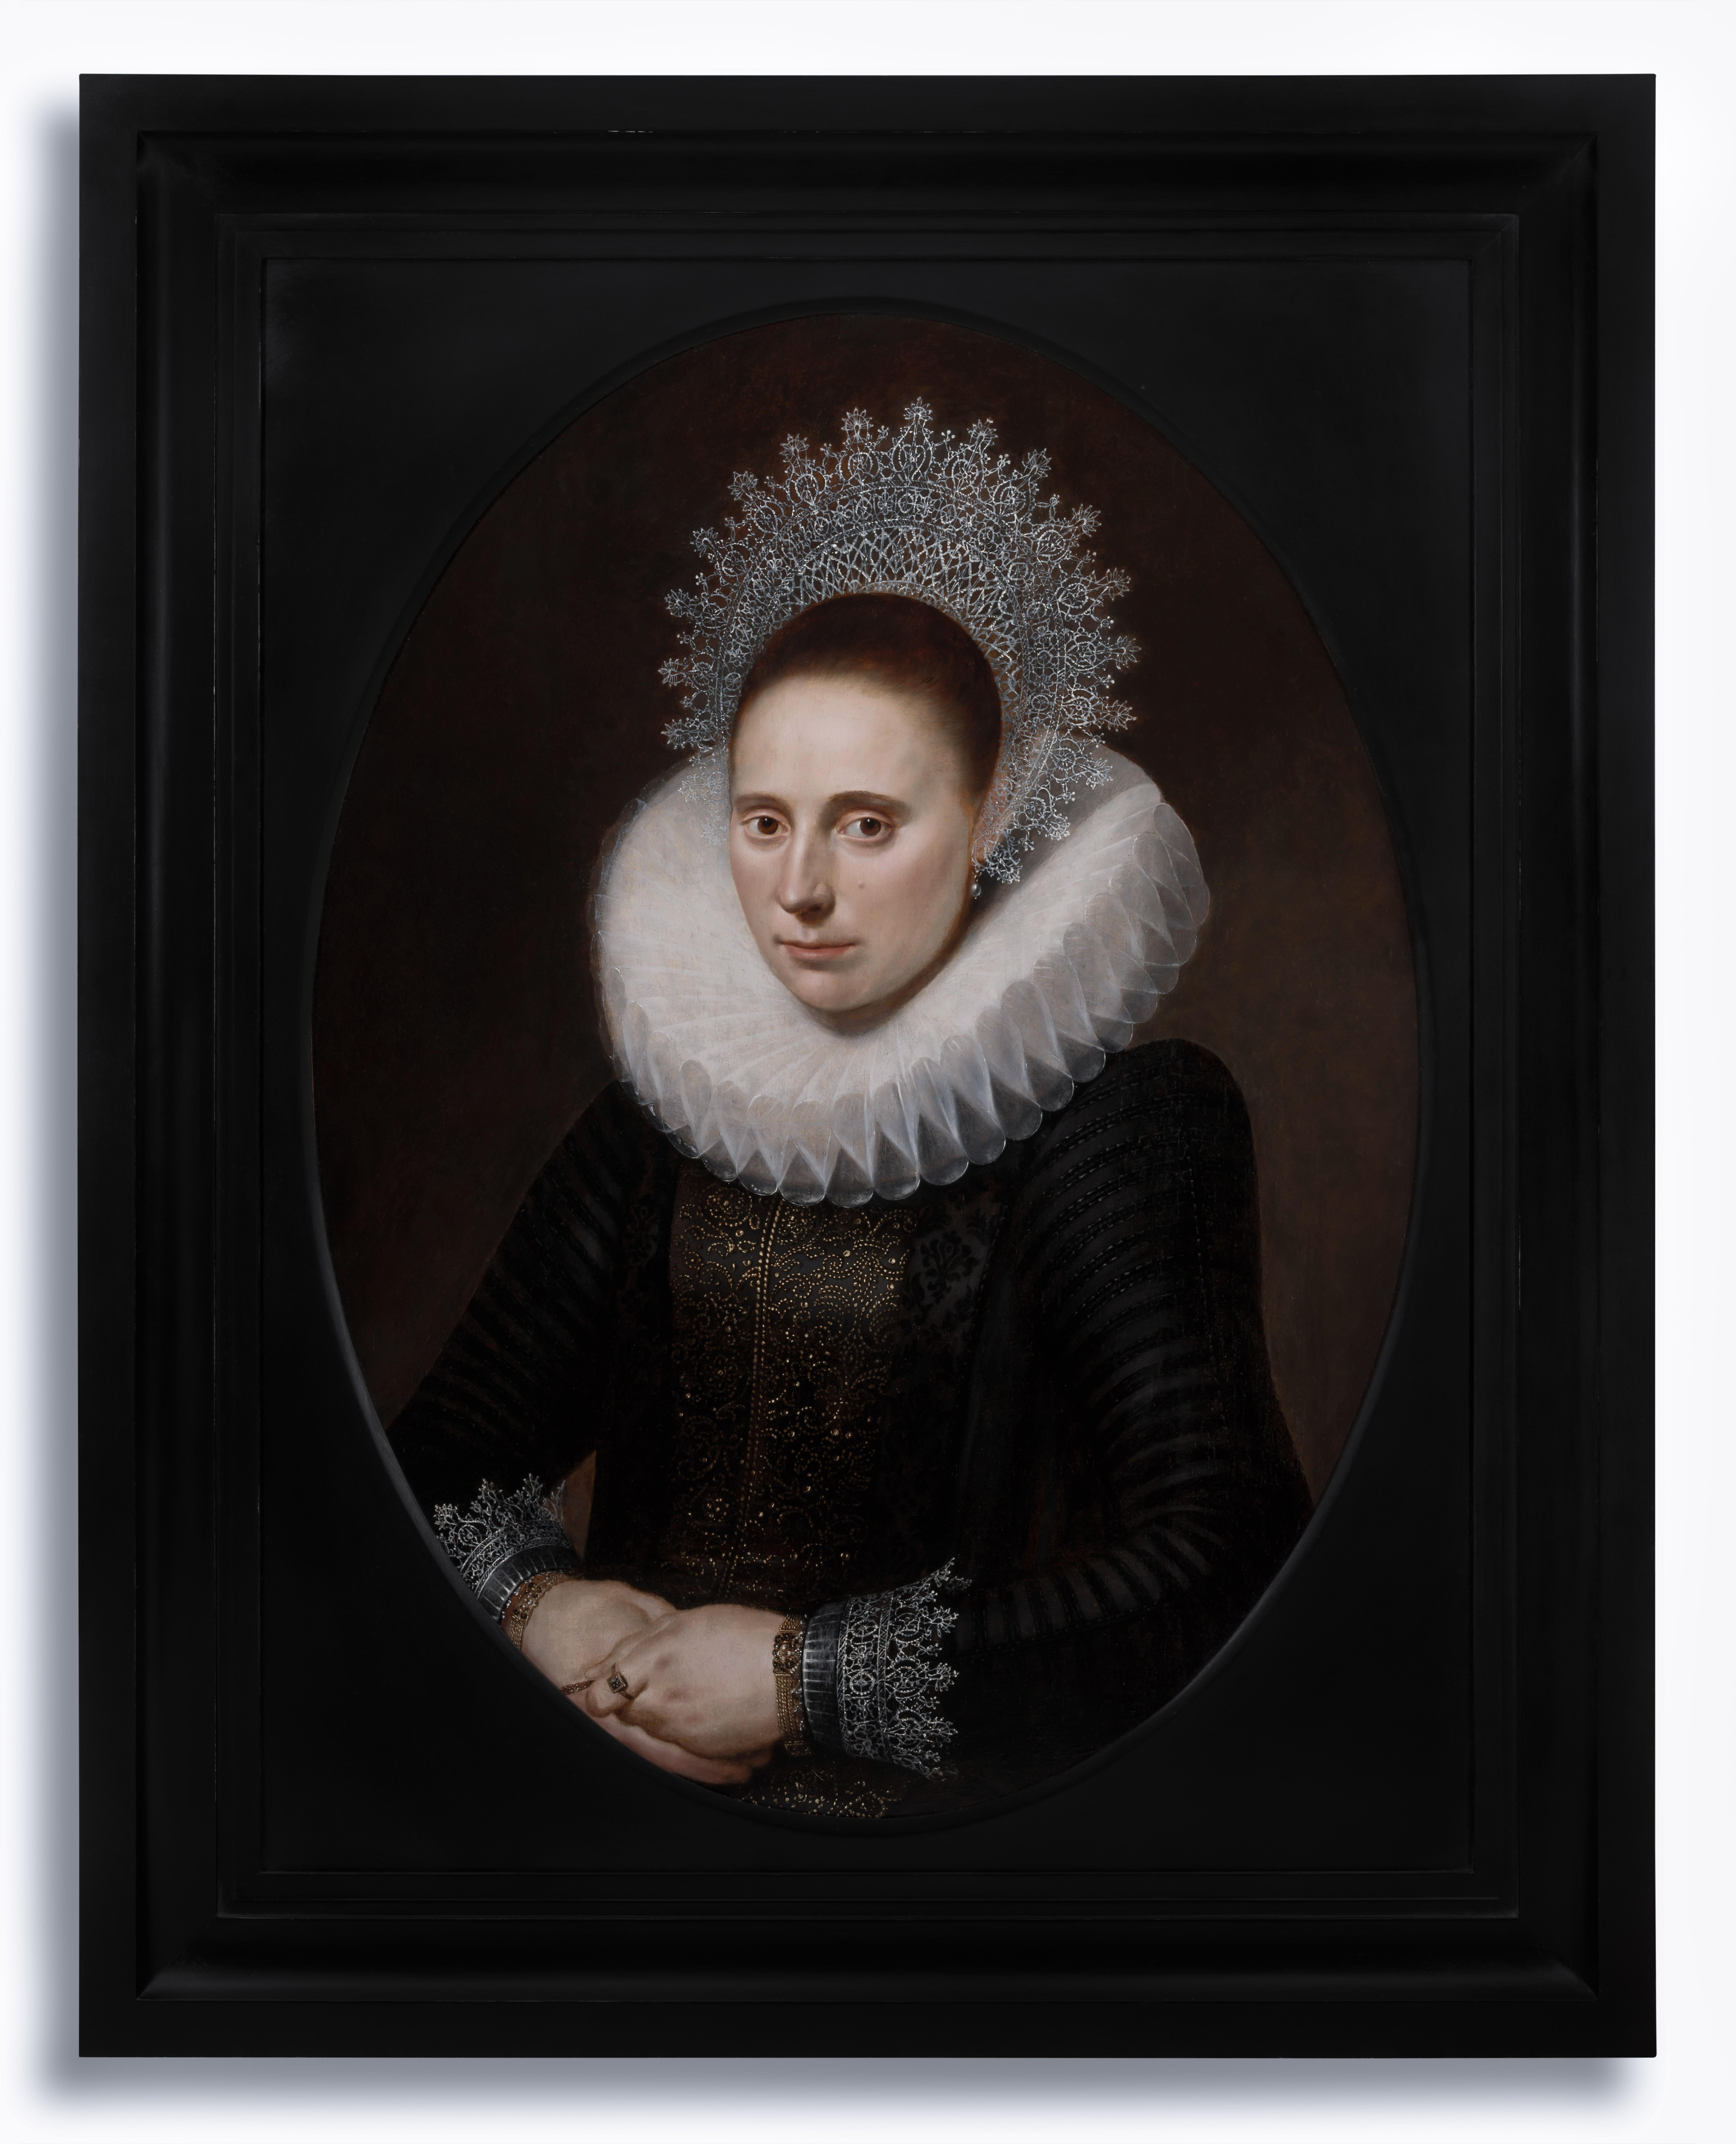 Cornelius van der Voort Portrait Painting - Portrait of a Lady in an Elaborate Ruff & Lace Coif c.1610-20, Dutch Old Master